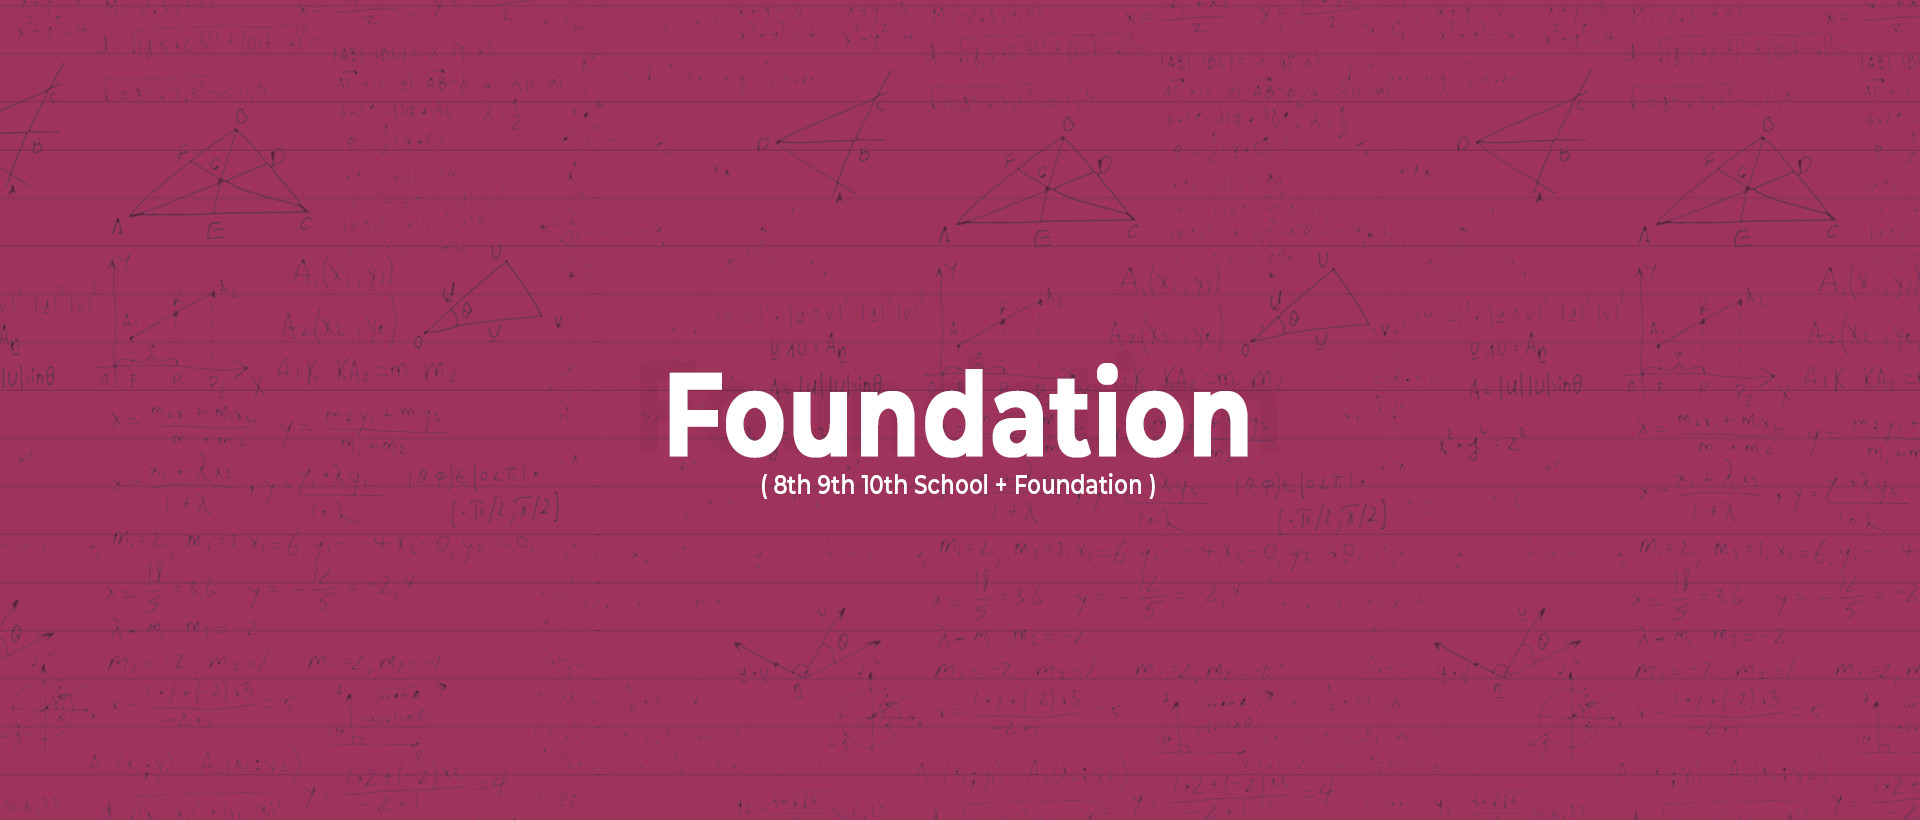 Foundation 